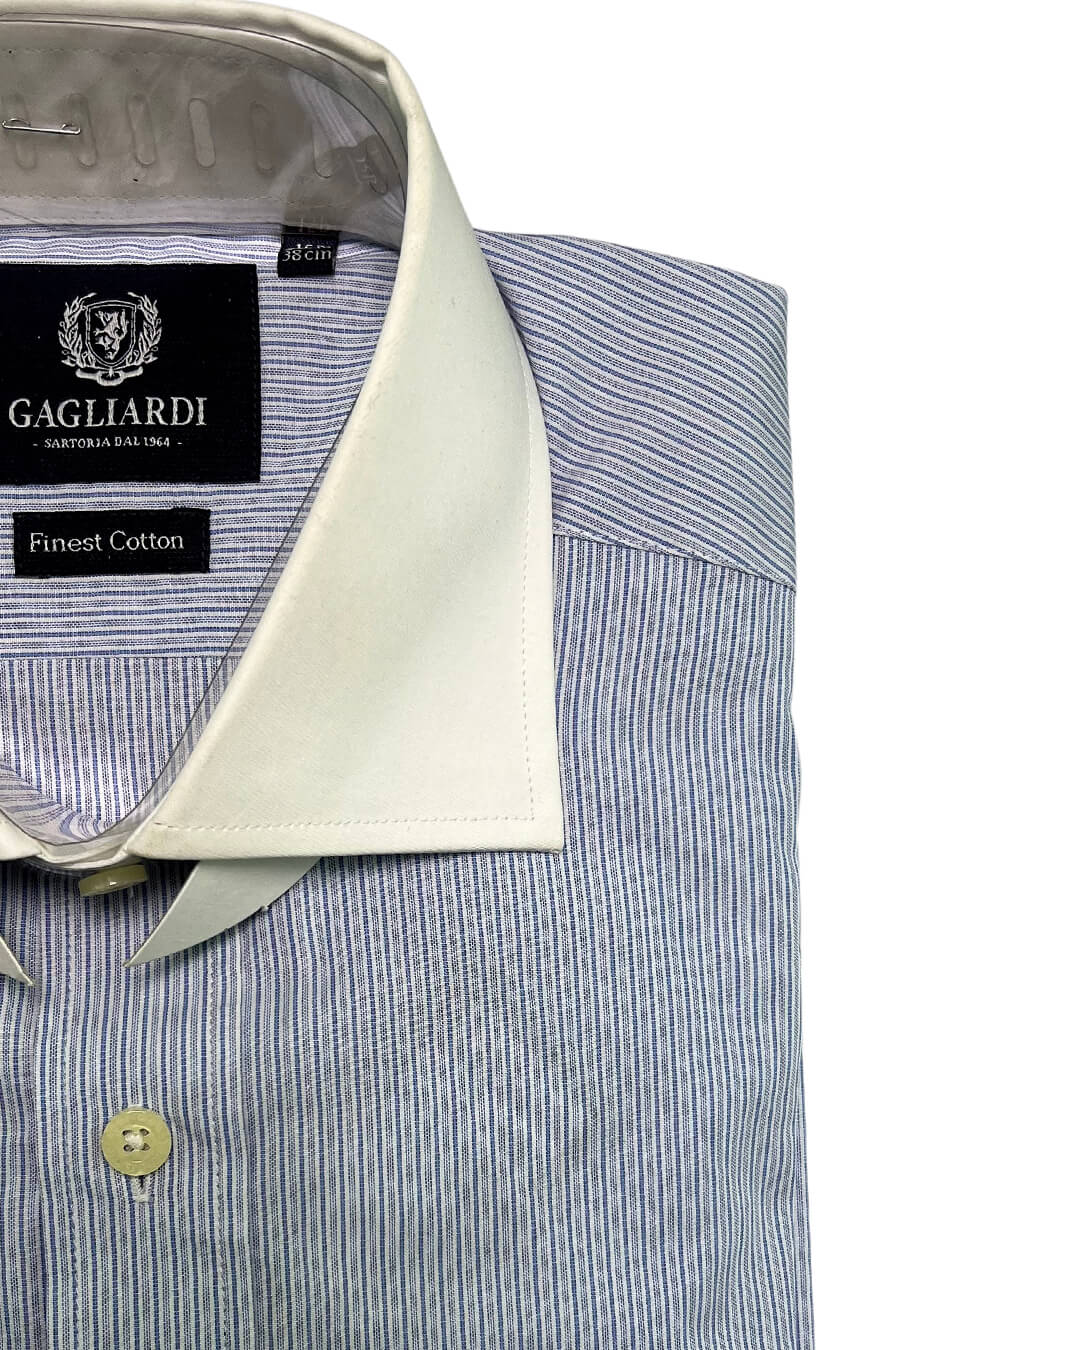 GAGLIARDI Shirts Gagliardi Blue Contrast With Multi Stripe Shirt